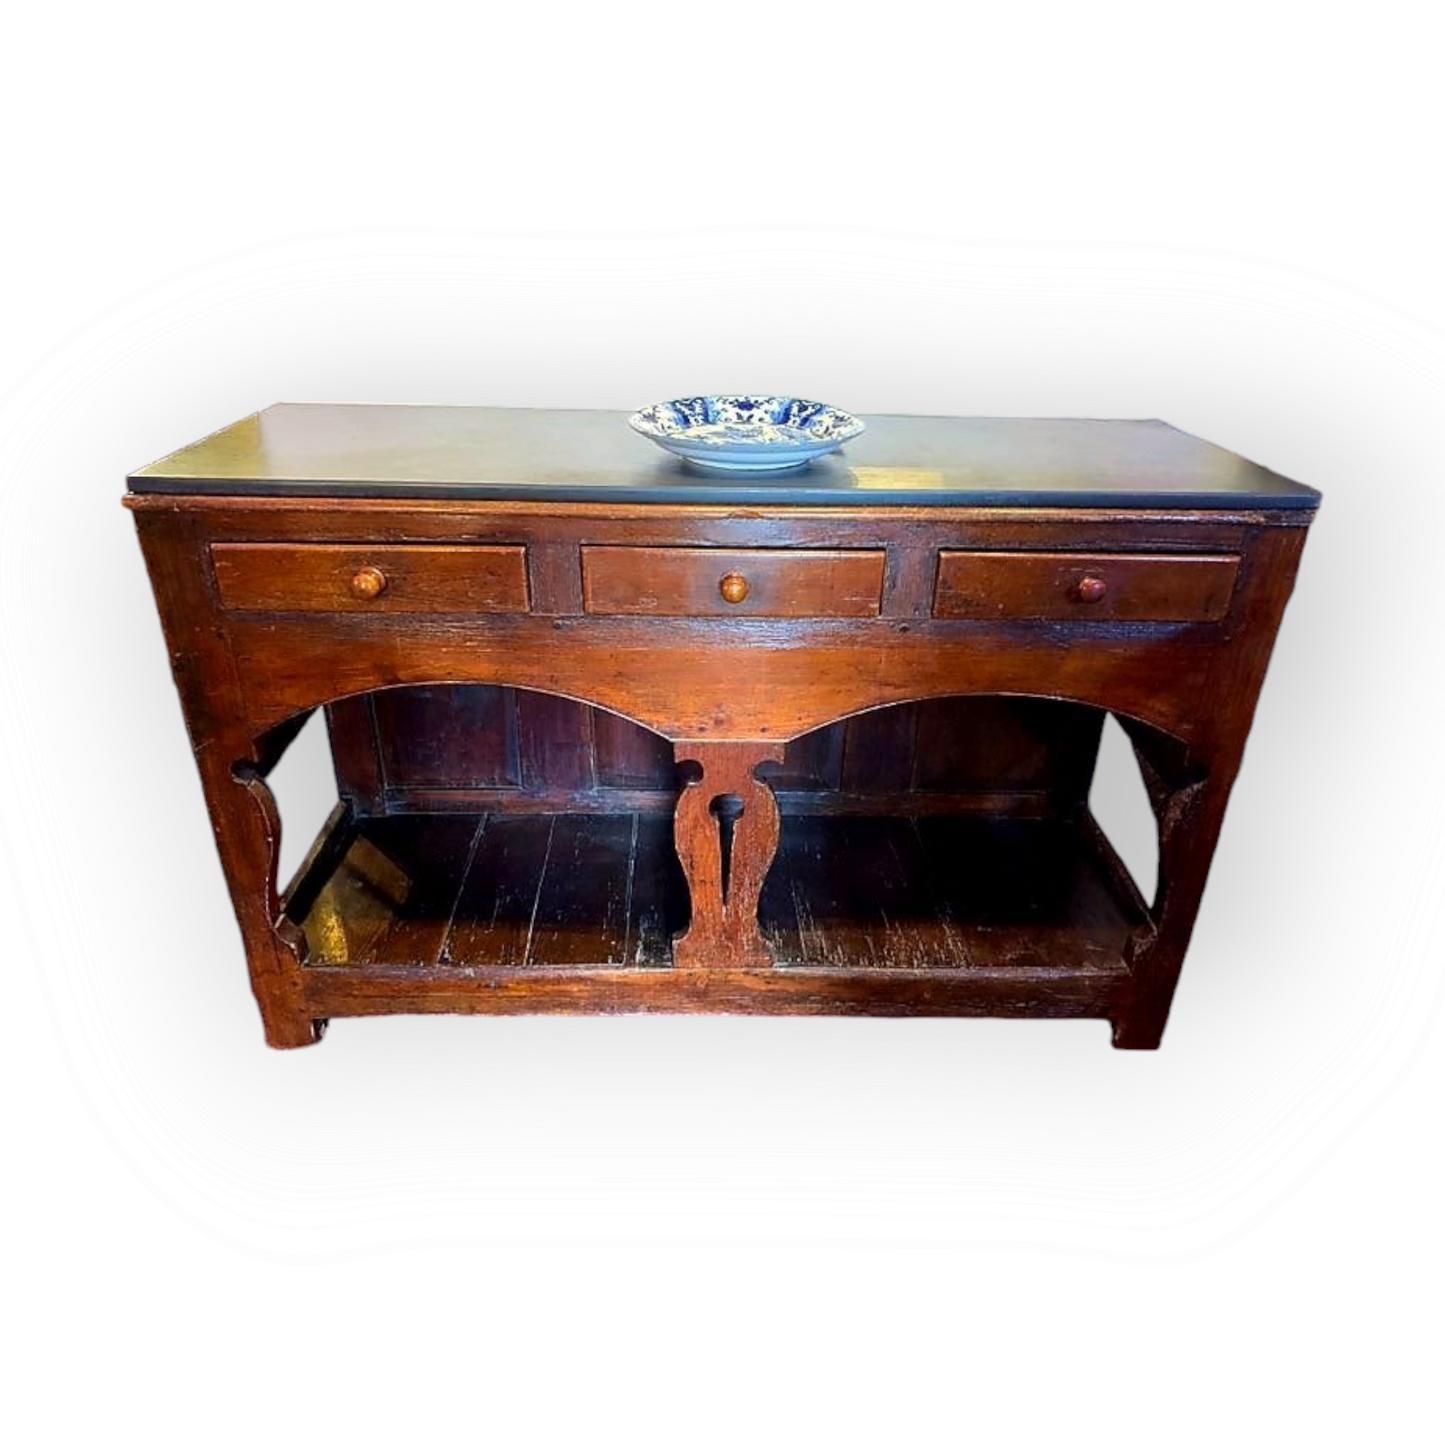 A Rustic Mid 18th Century English Antique Pine Pot Board Dresser Base